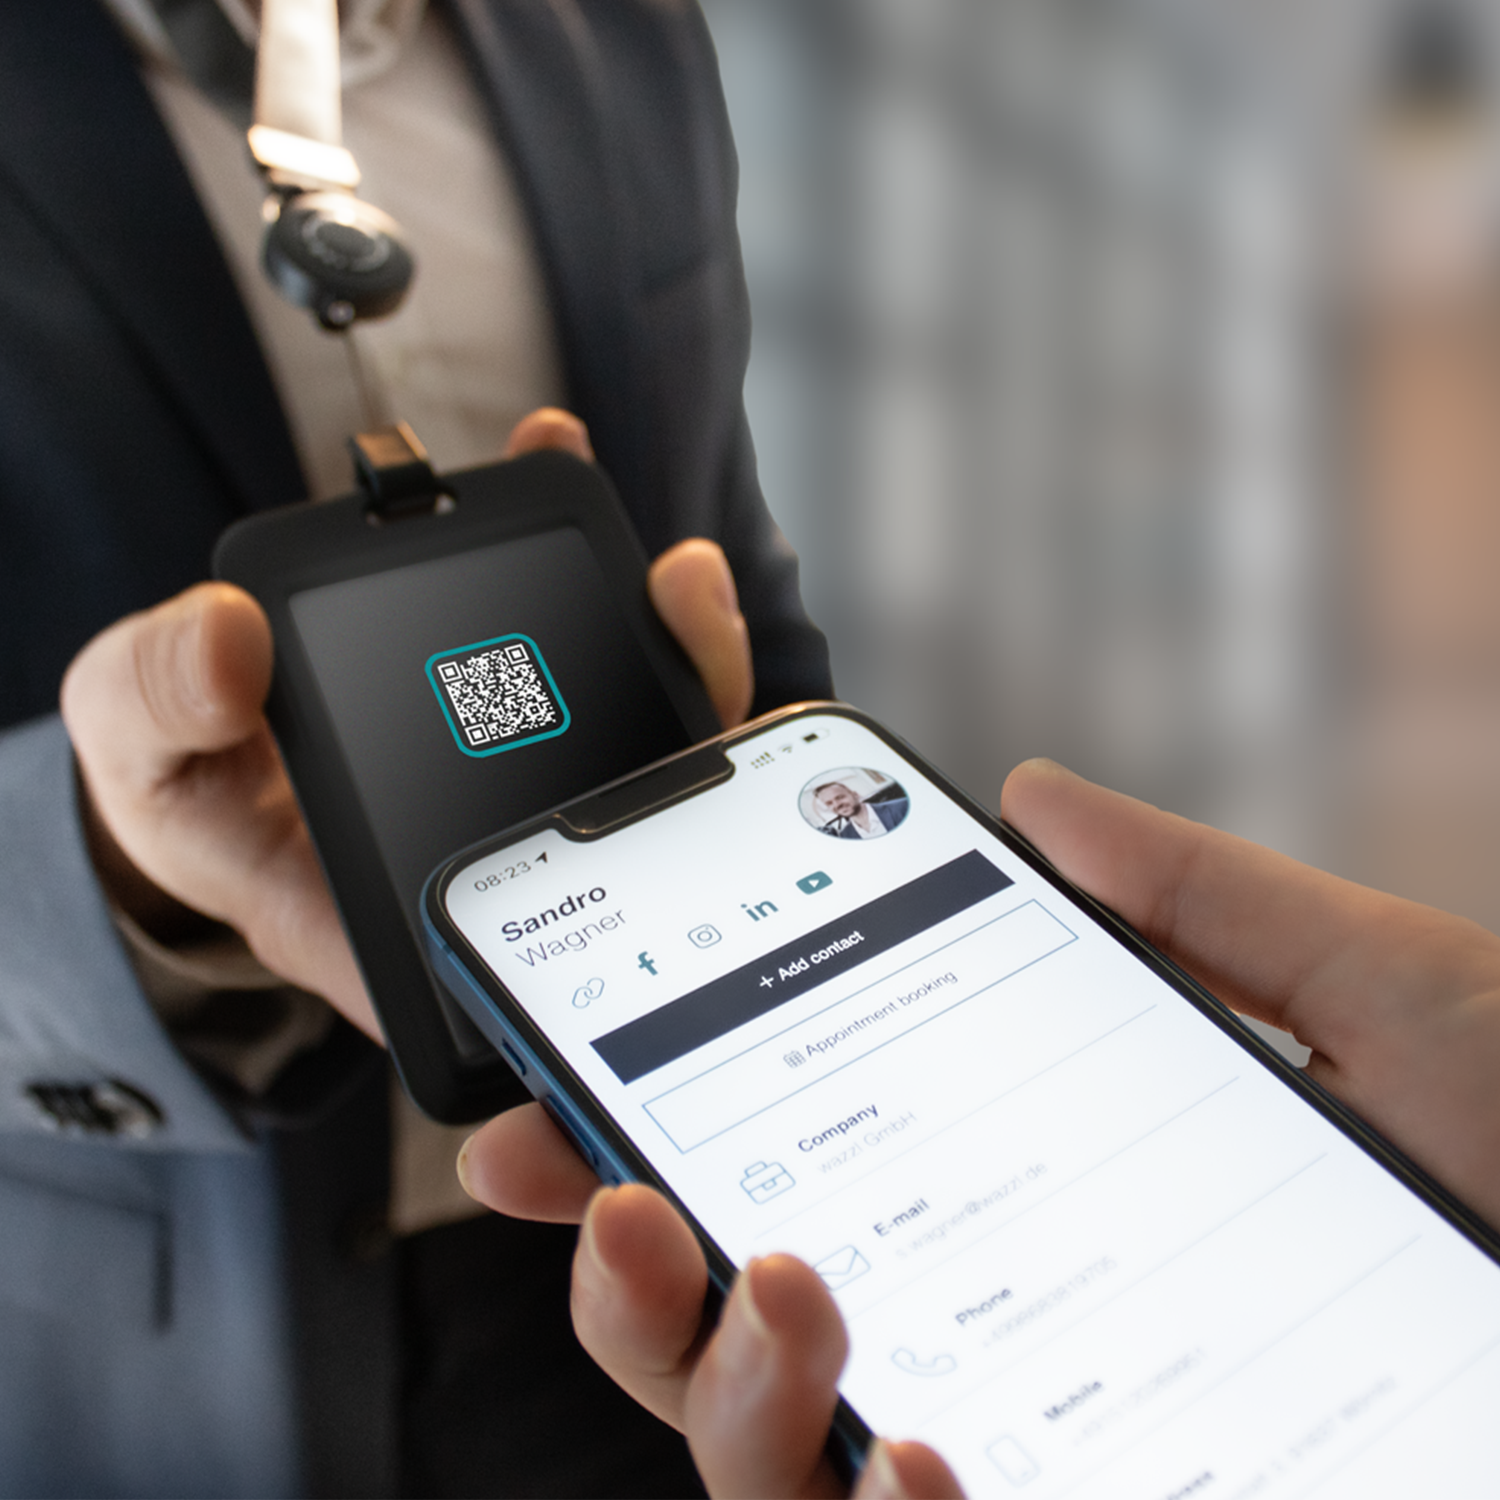 personalisierbarer Smartbadge - Digitale Visitenkarte NFC